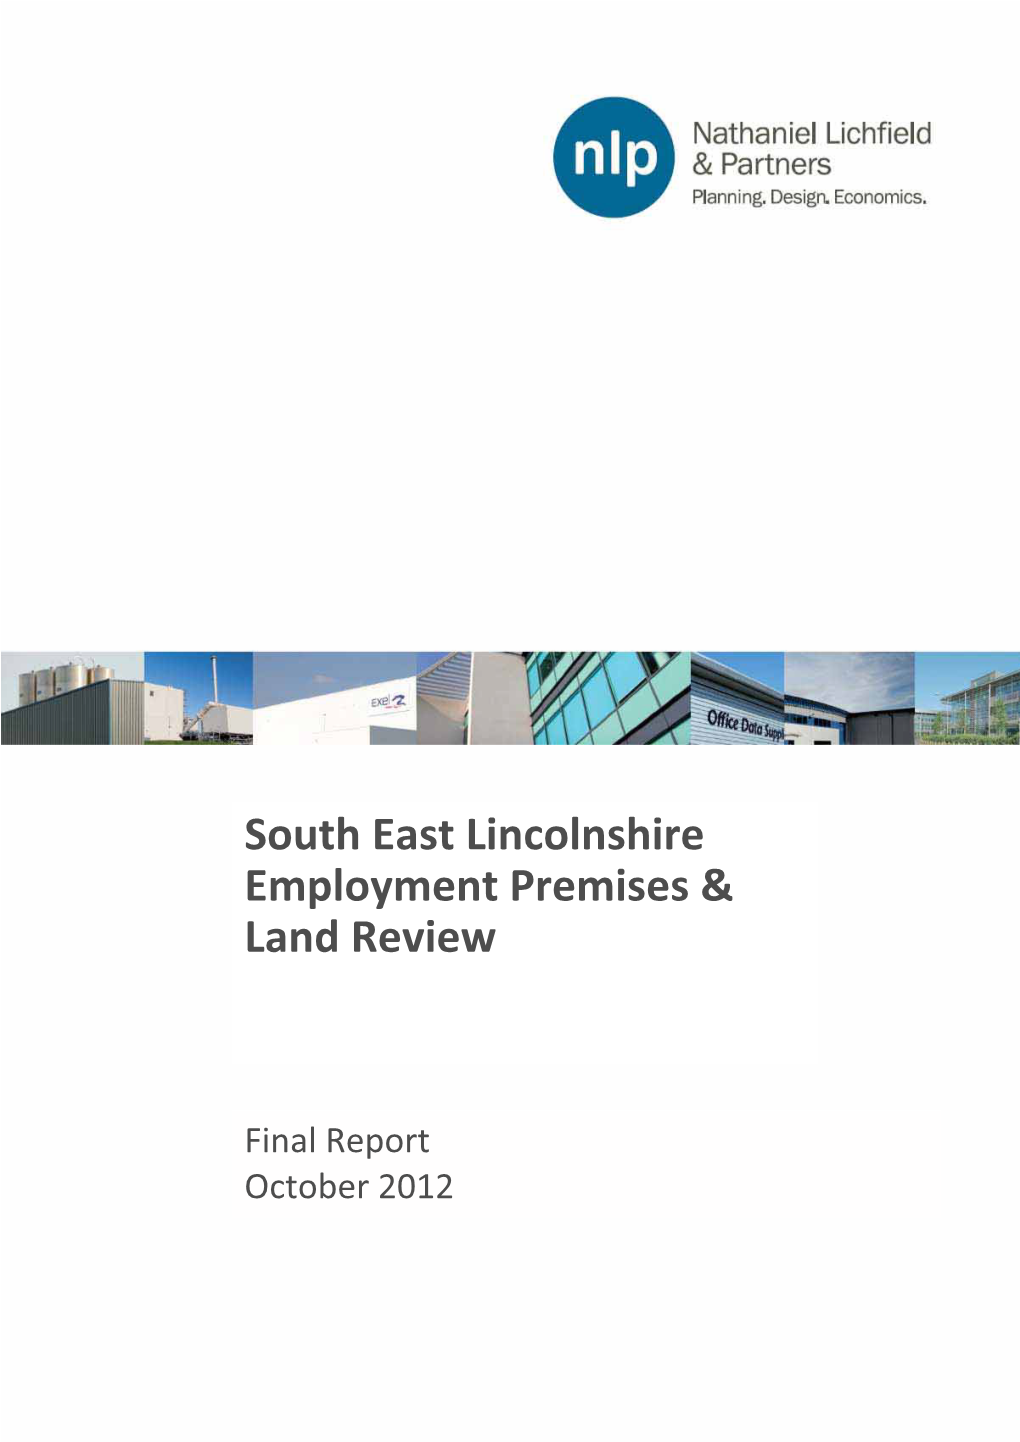 South East Lincolnshire Employment Premises & Land Review